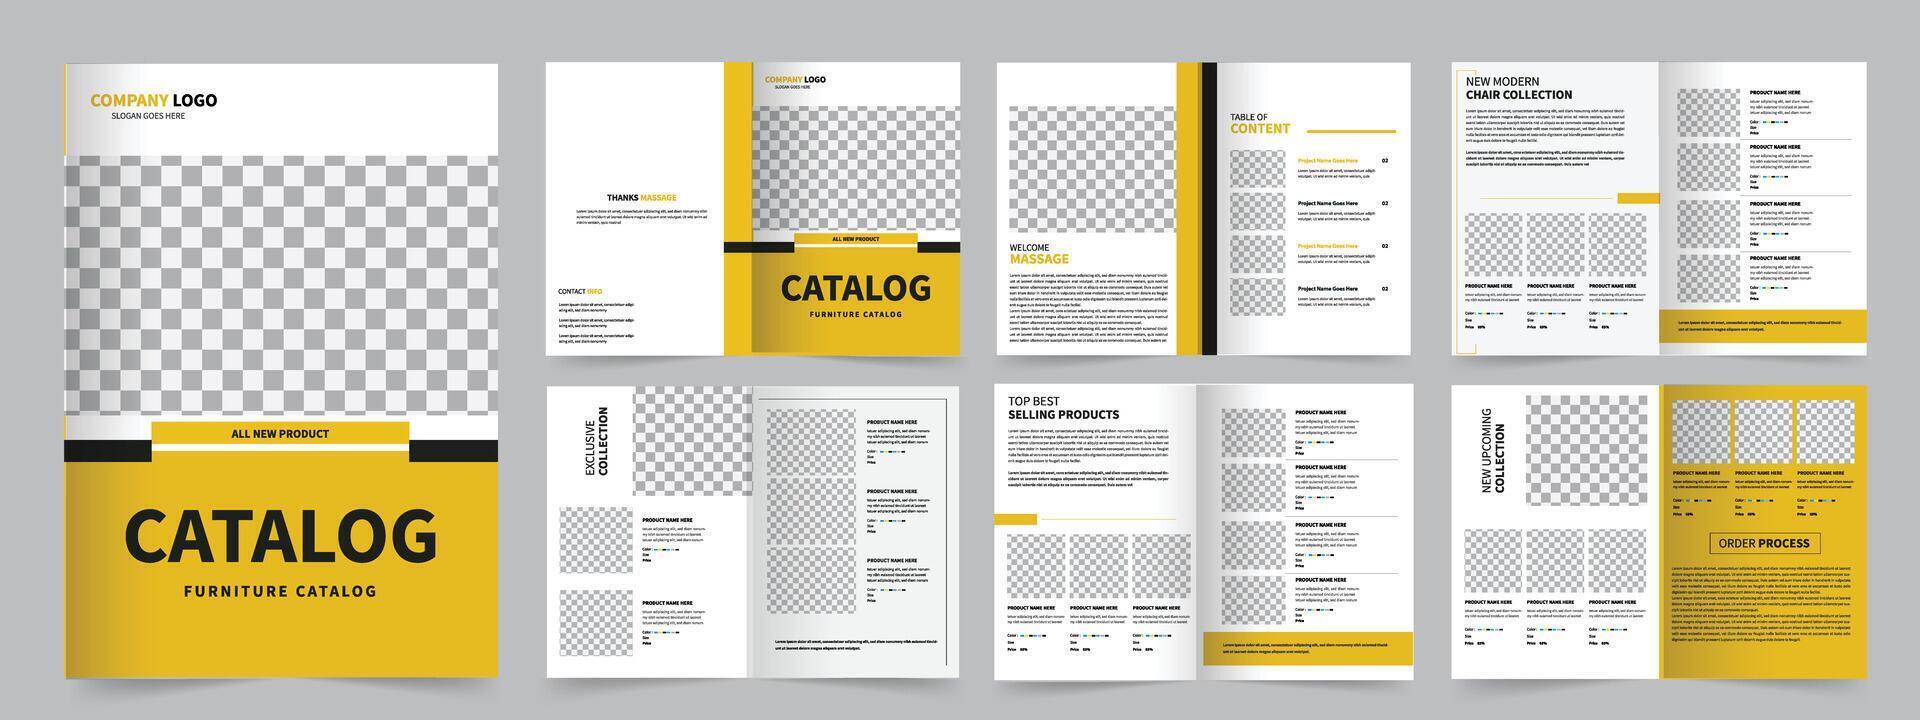 catalogus sjabloon ontwerp, meubilair producten catalogus lay-out, bewerkbare ontwerp vector